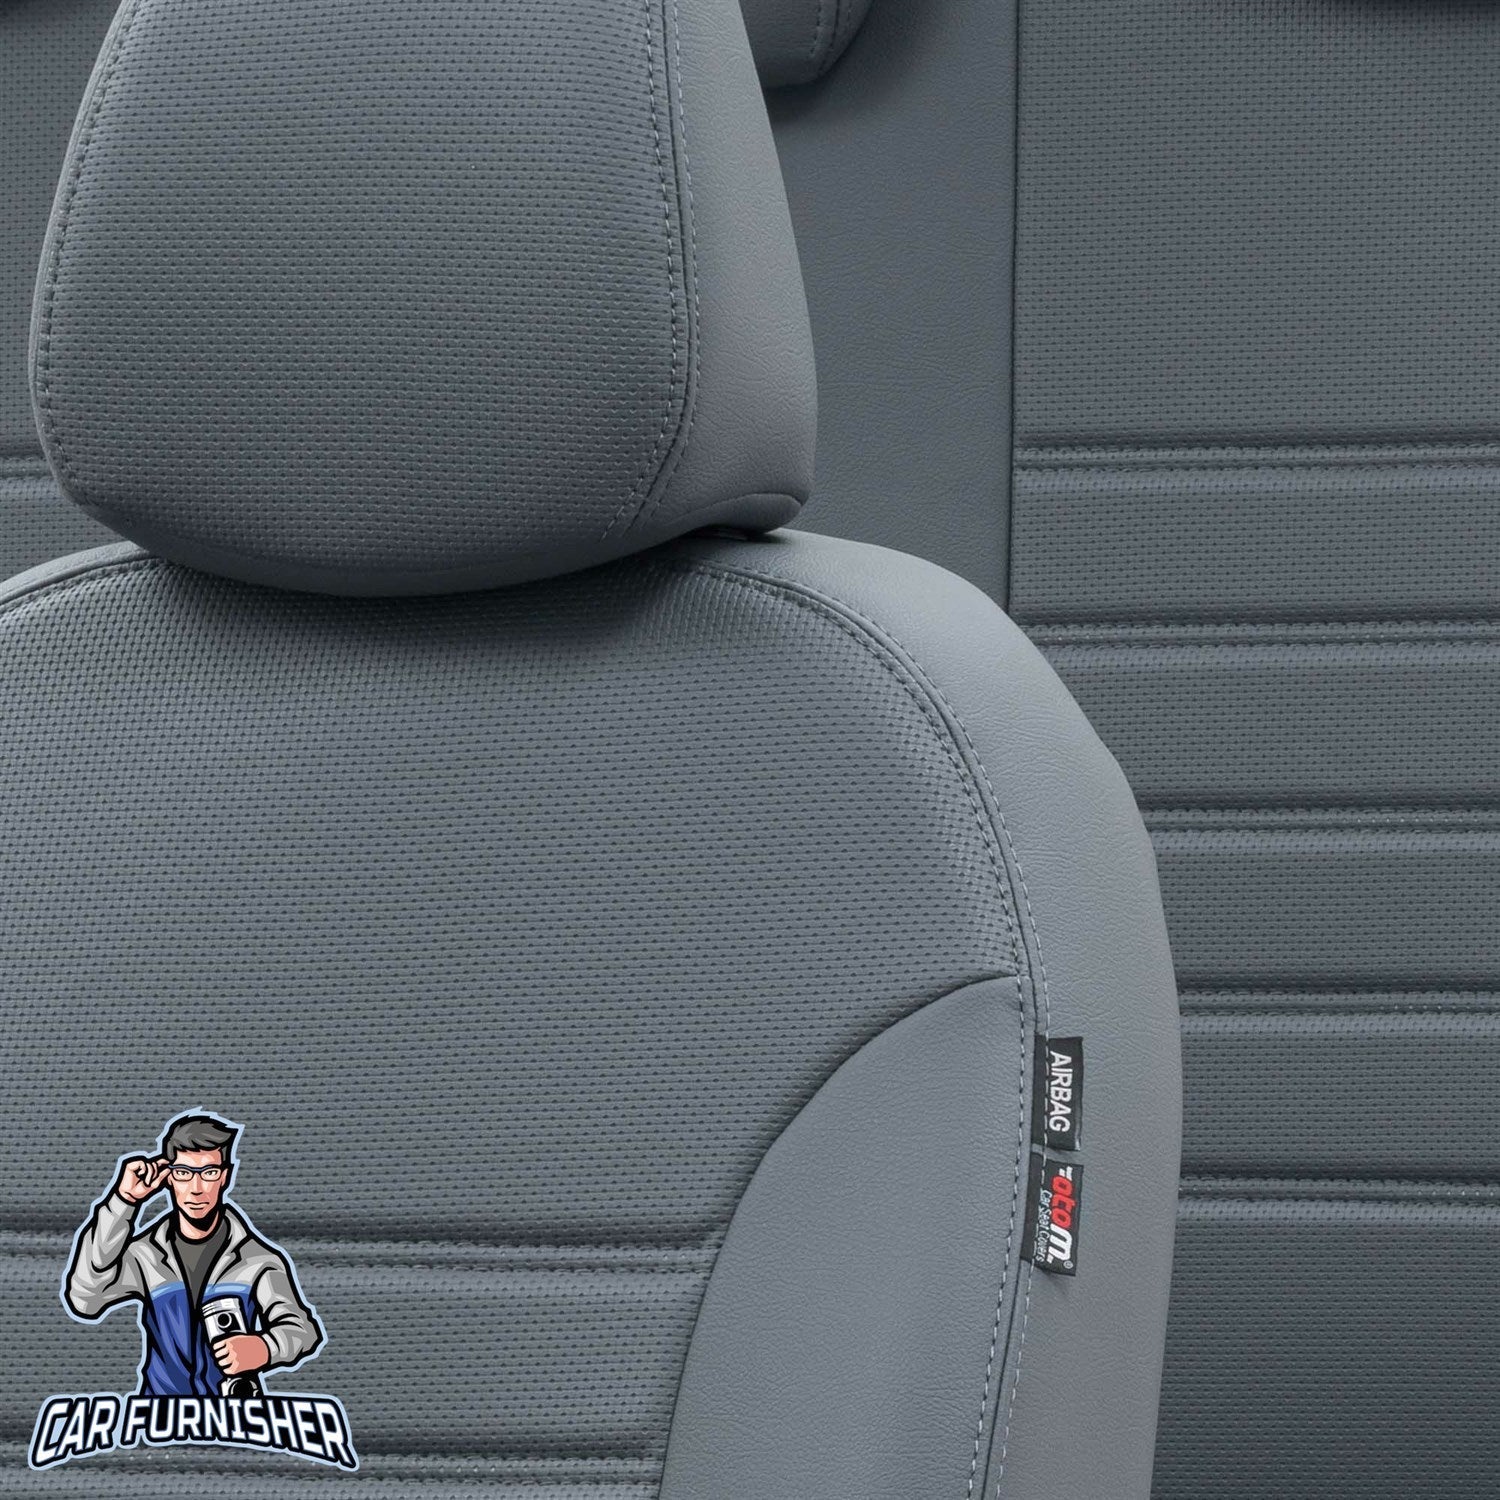 Renault Koleos Car Seat Covers 2017-2023 New York Design Smoked Leather & Fabric